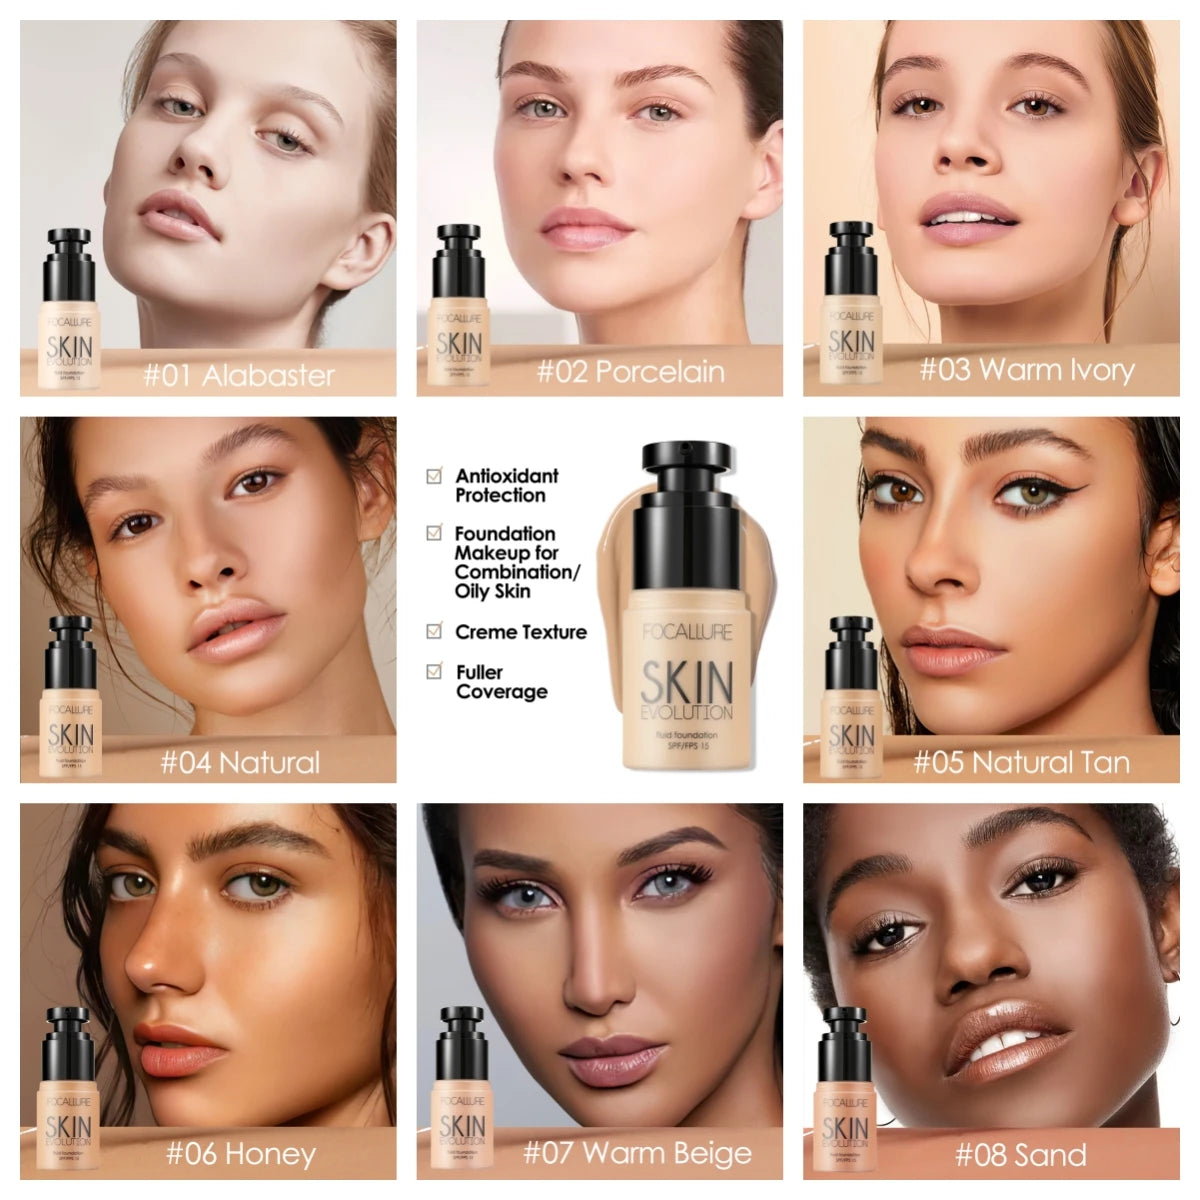 FOCALLURE Waterproof Matte Face Liquid Foundation Full Coverage Concealer Whitening Face Makeup Base Cream Cosmetics